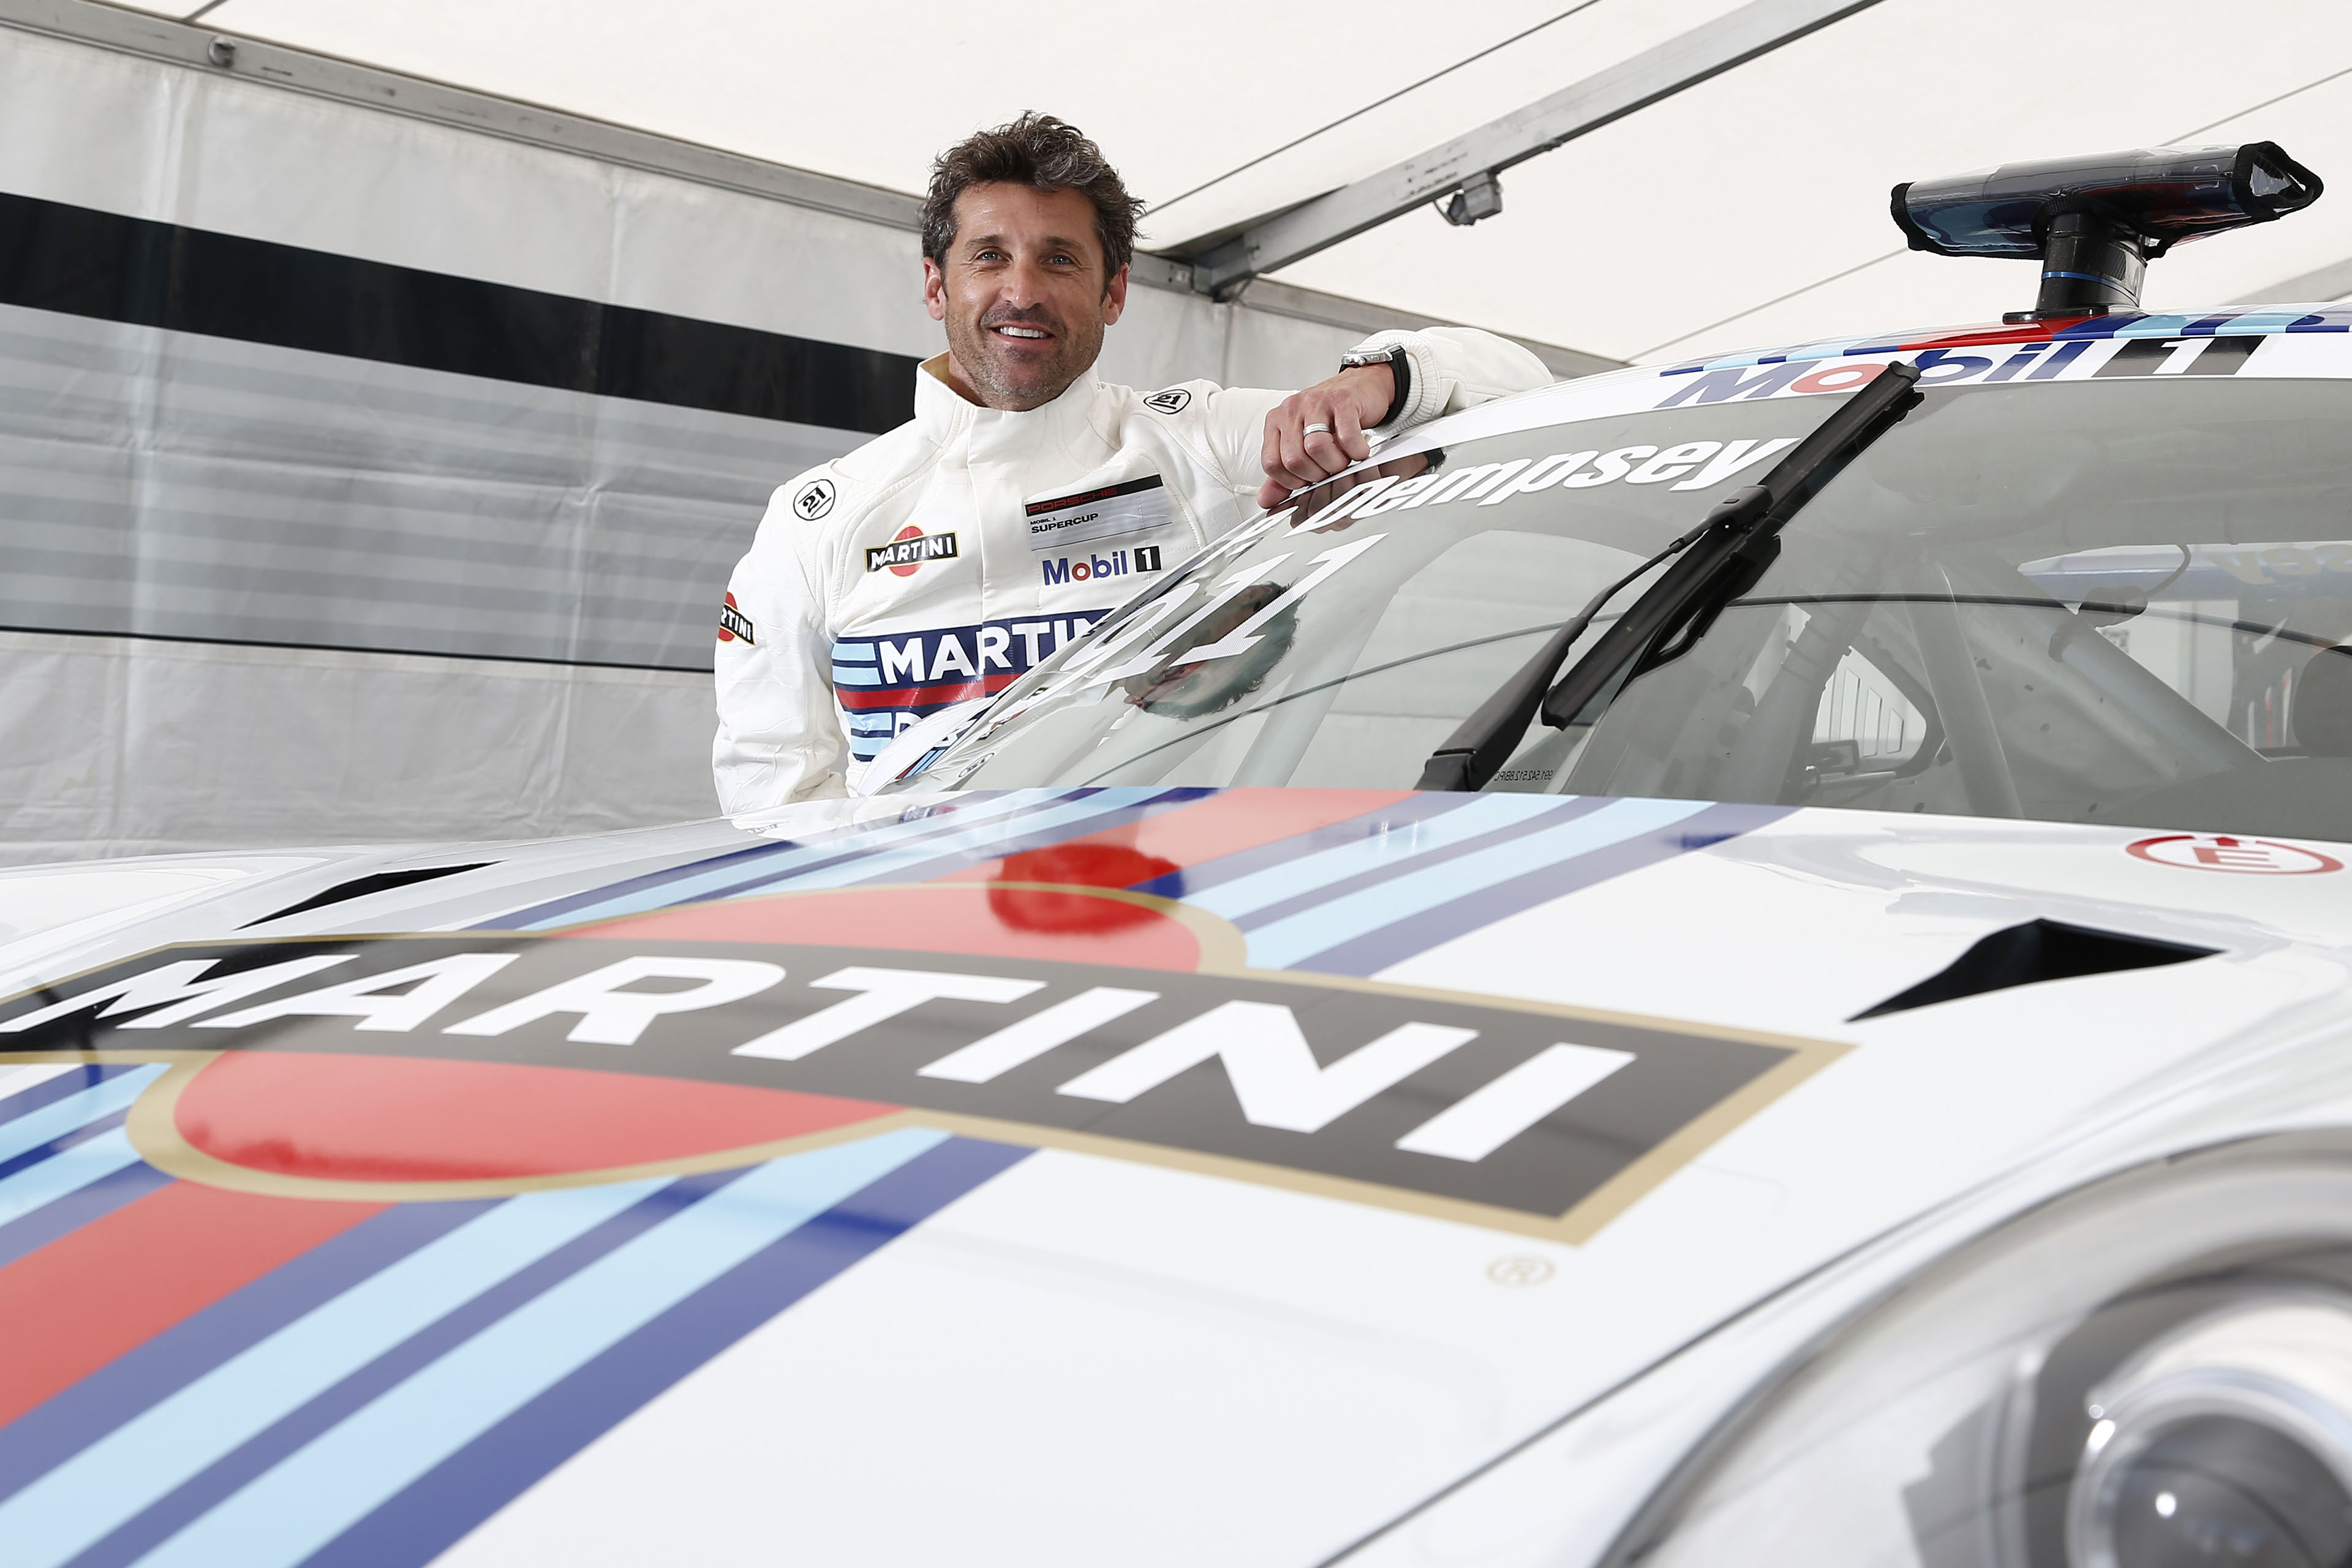 Patrick Dempsey Races For Martini in the Porsche Mobil 1 Supercup